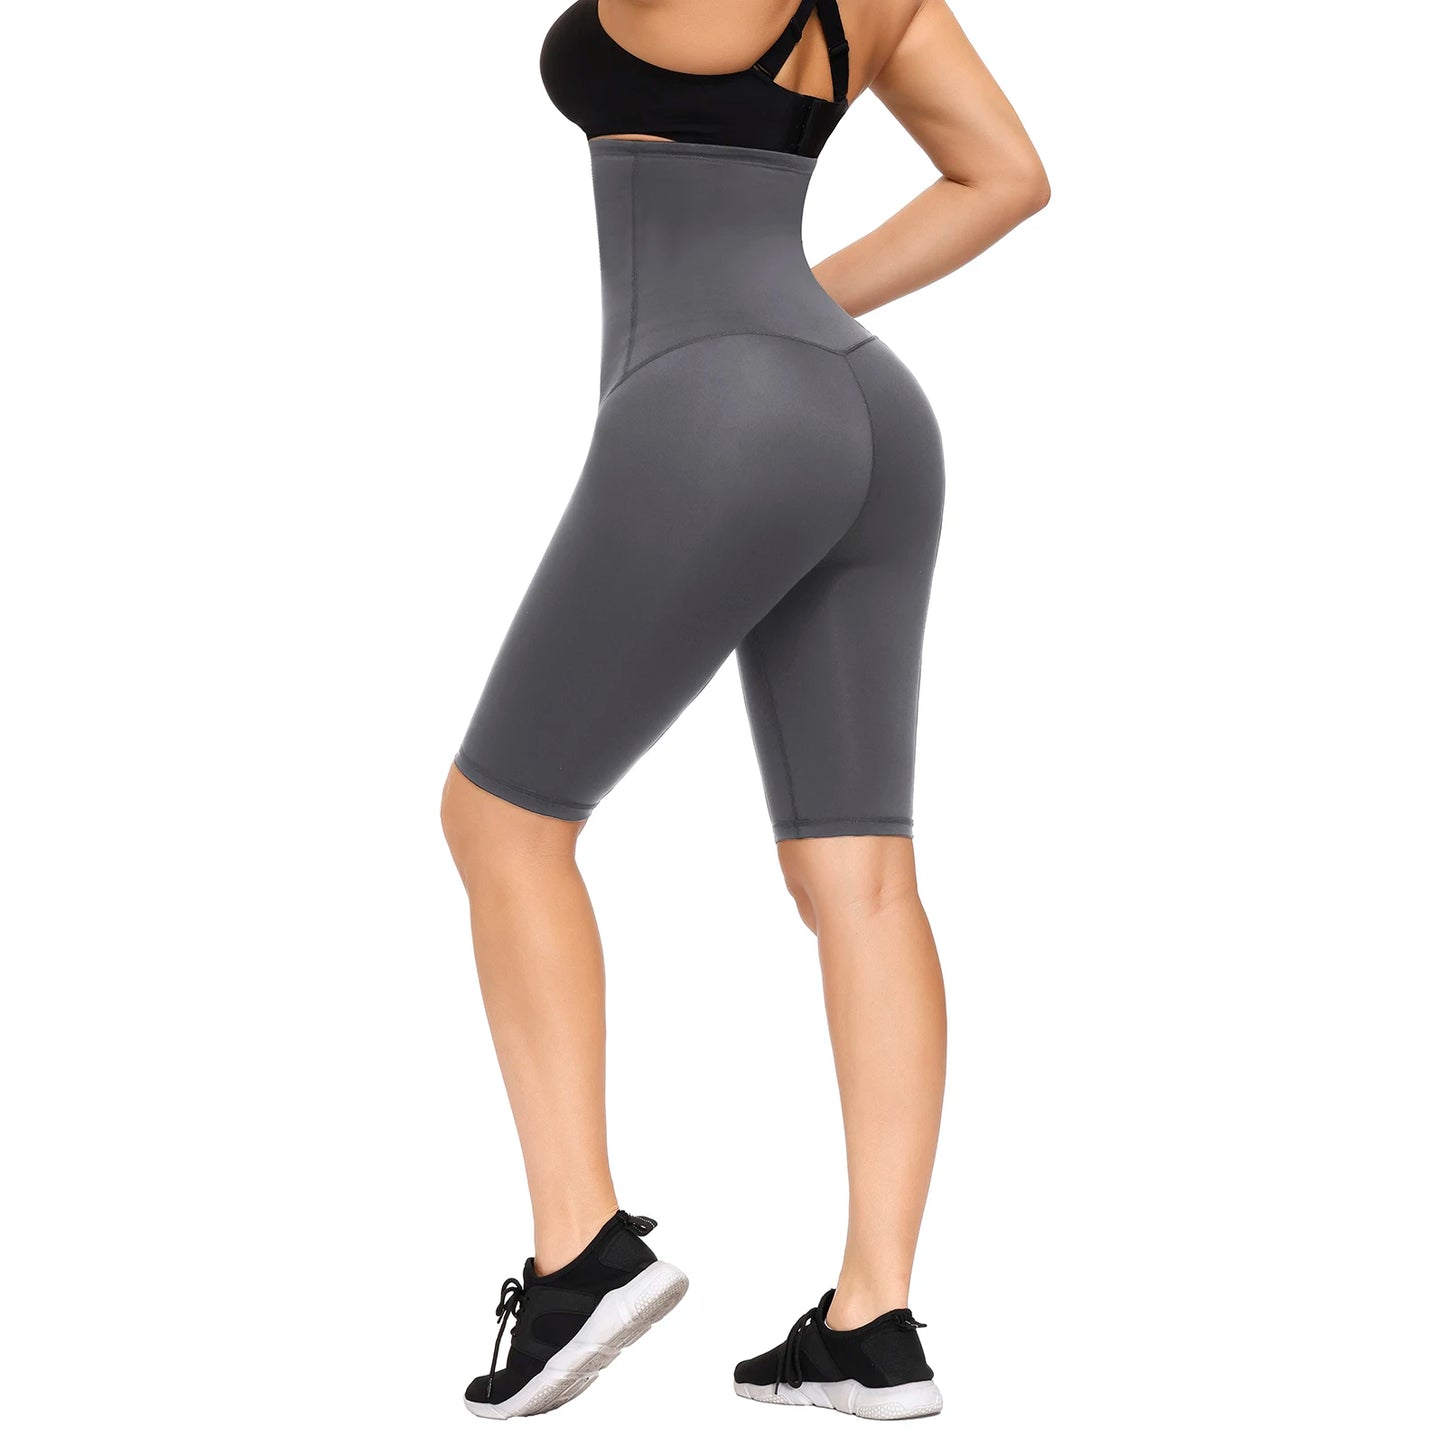 2 in 1 Waist Trainer Leggings Shorts Tummy Control Fat Burning/Adjustable Hook Body Shaper Yoga Running Tights